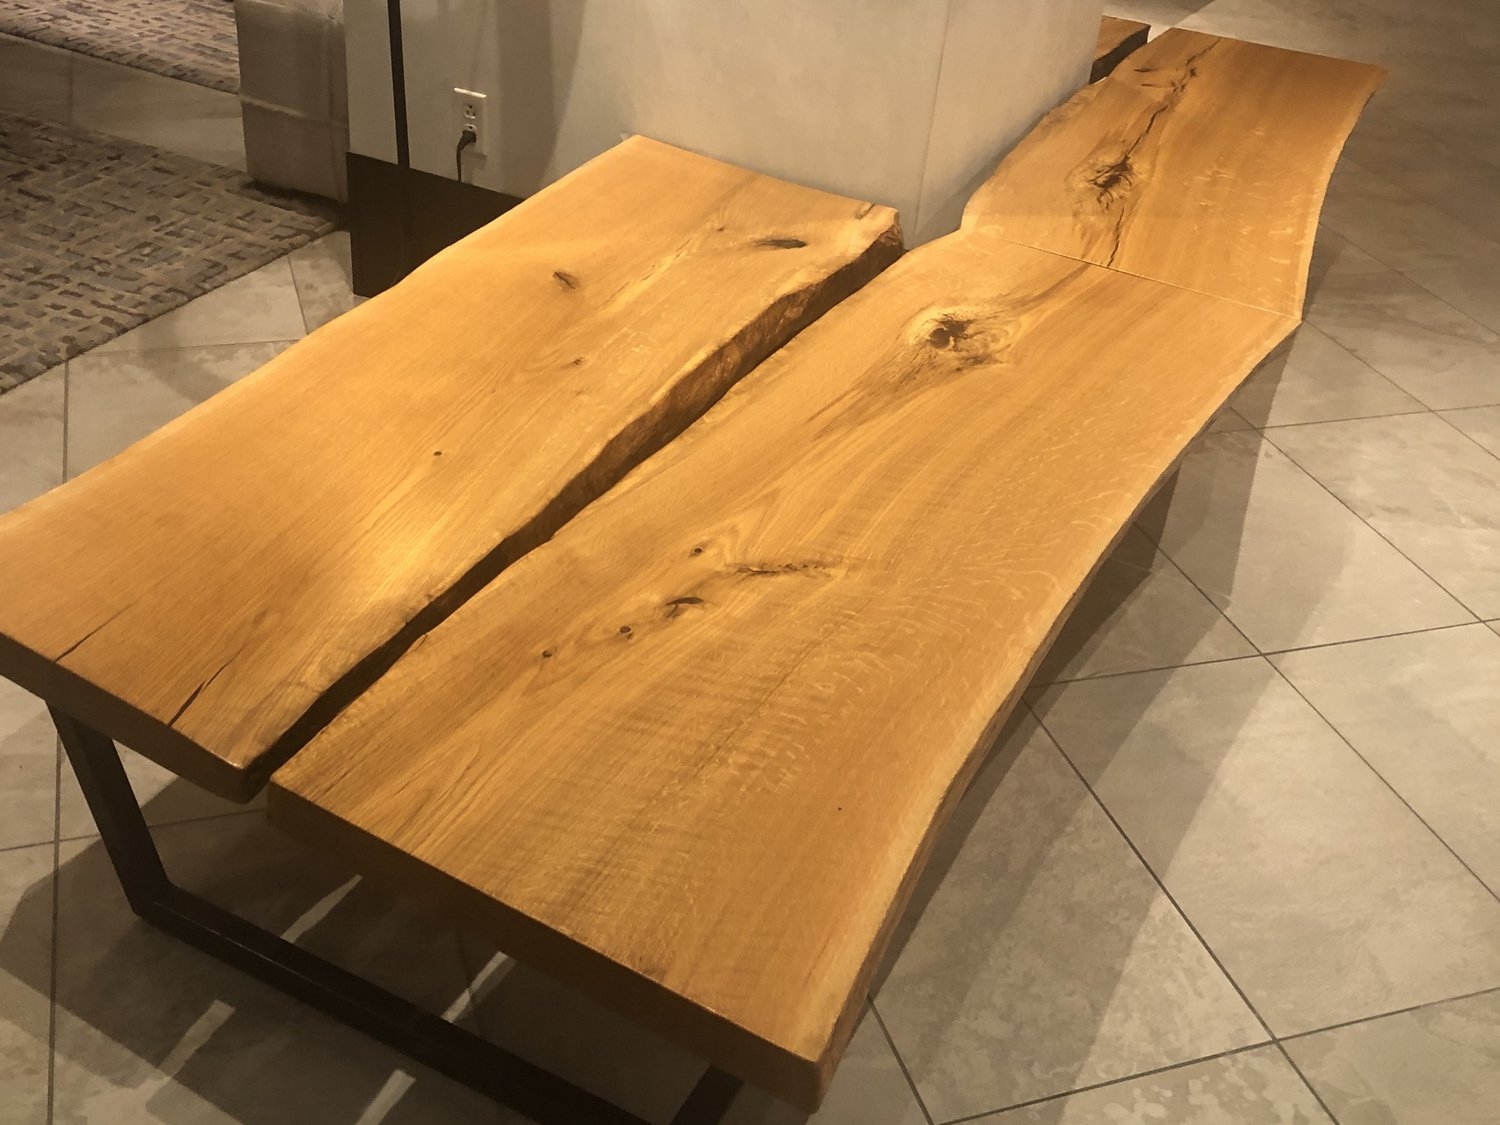 Live edge wood slab bench